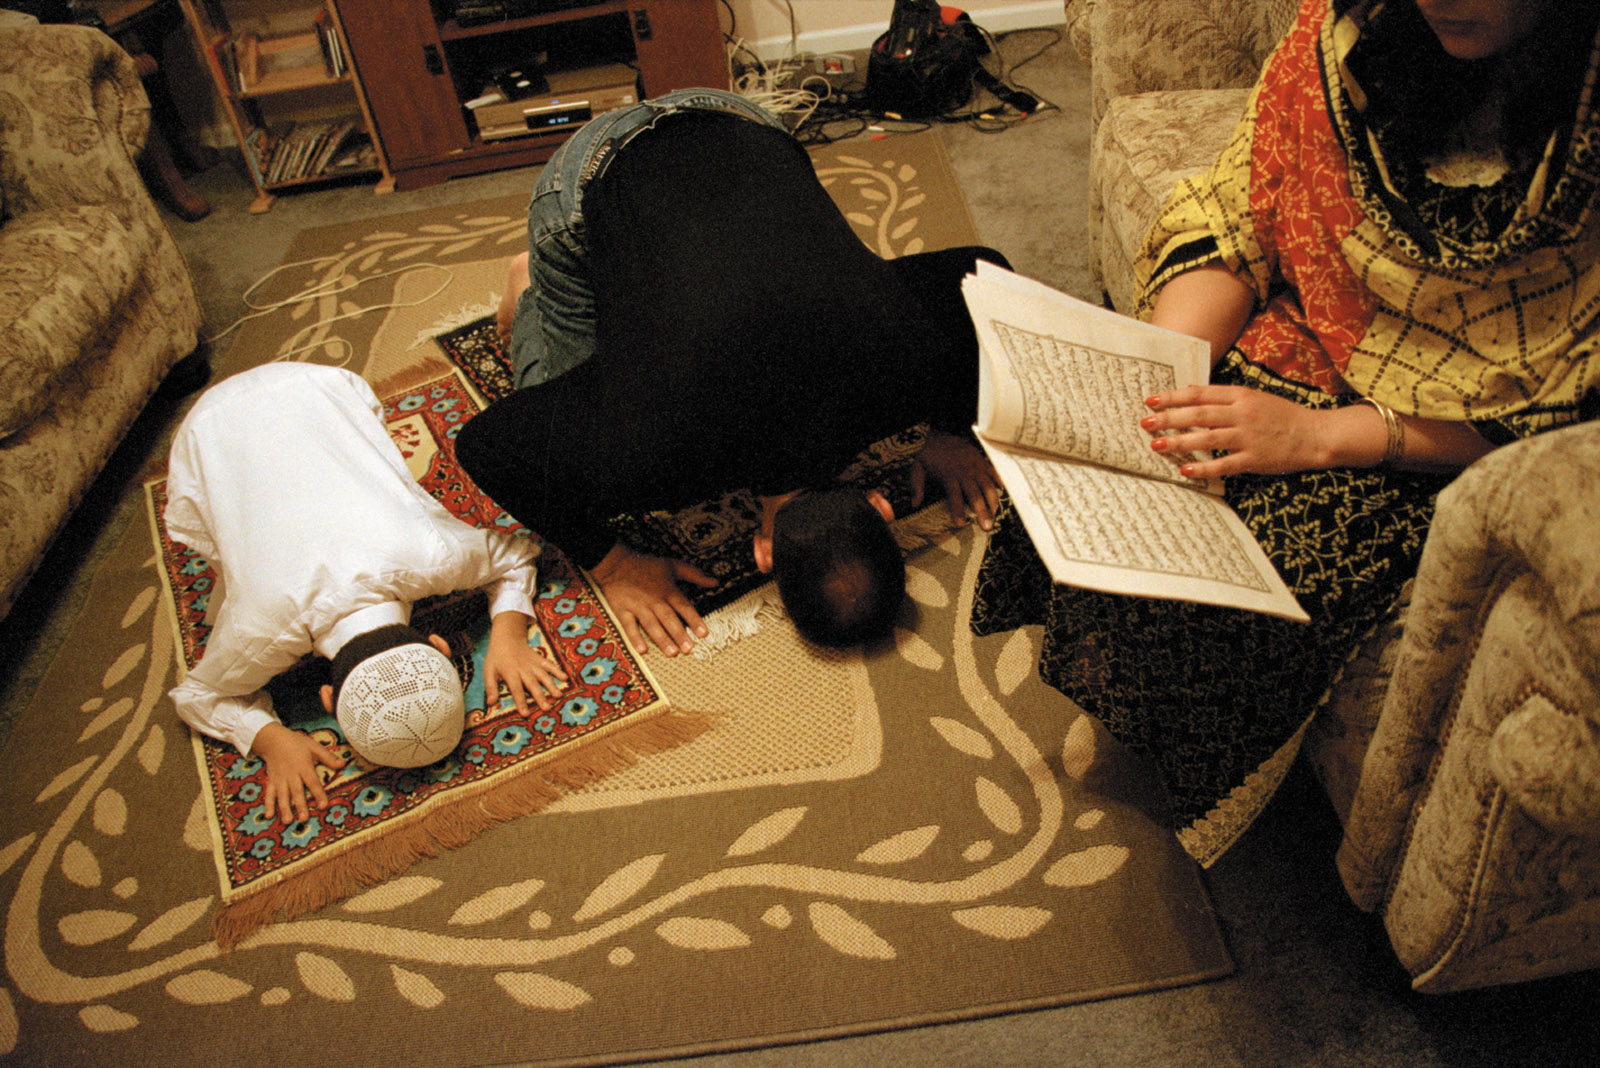 A Muslim family praying, Rockwood, Minnesota, 2003